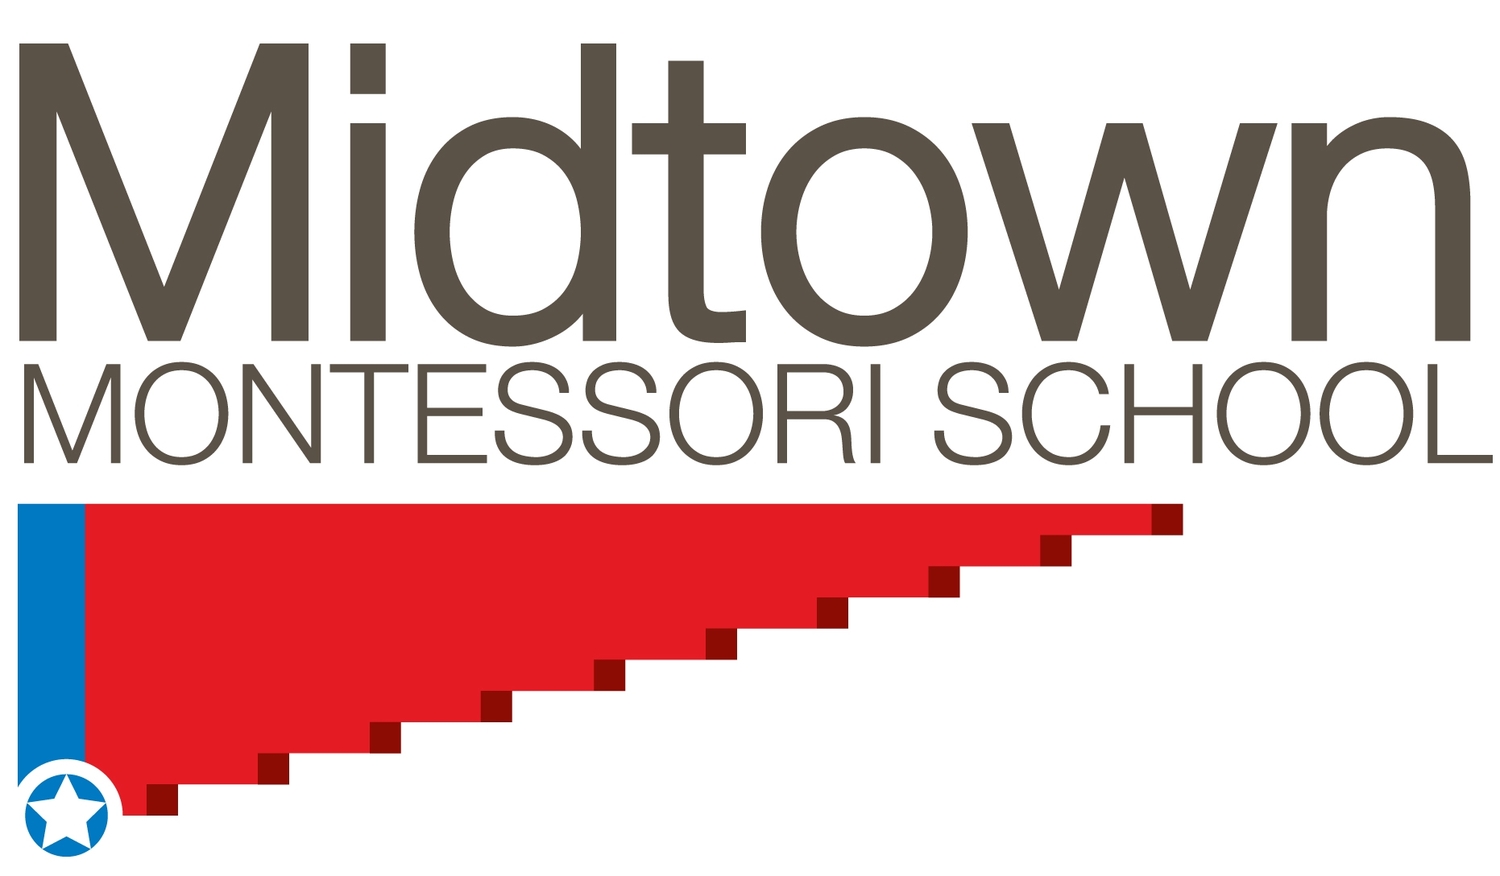 Midtown Montessori School